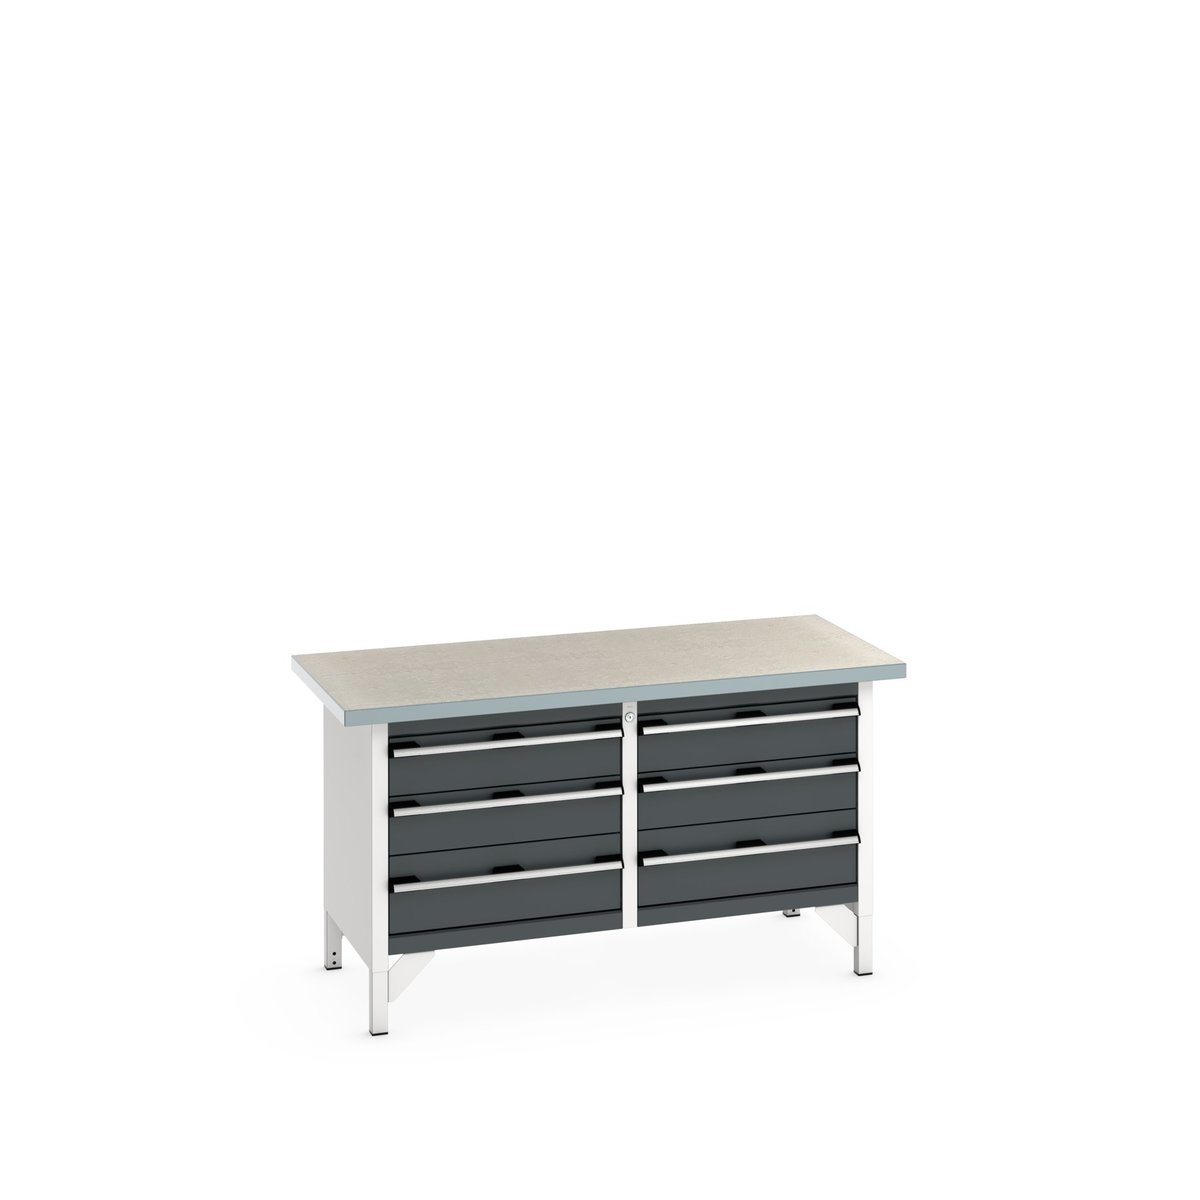 41002033. - cubio storage bench (lino)